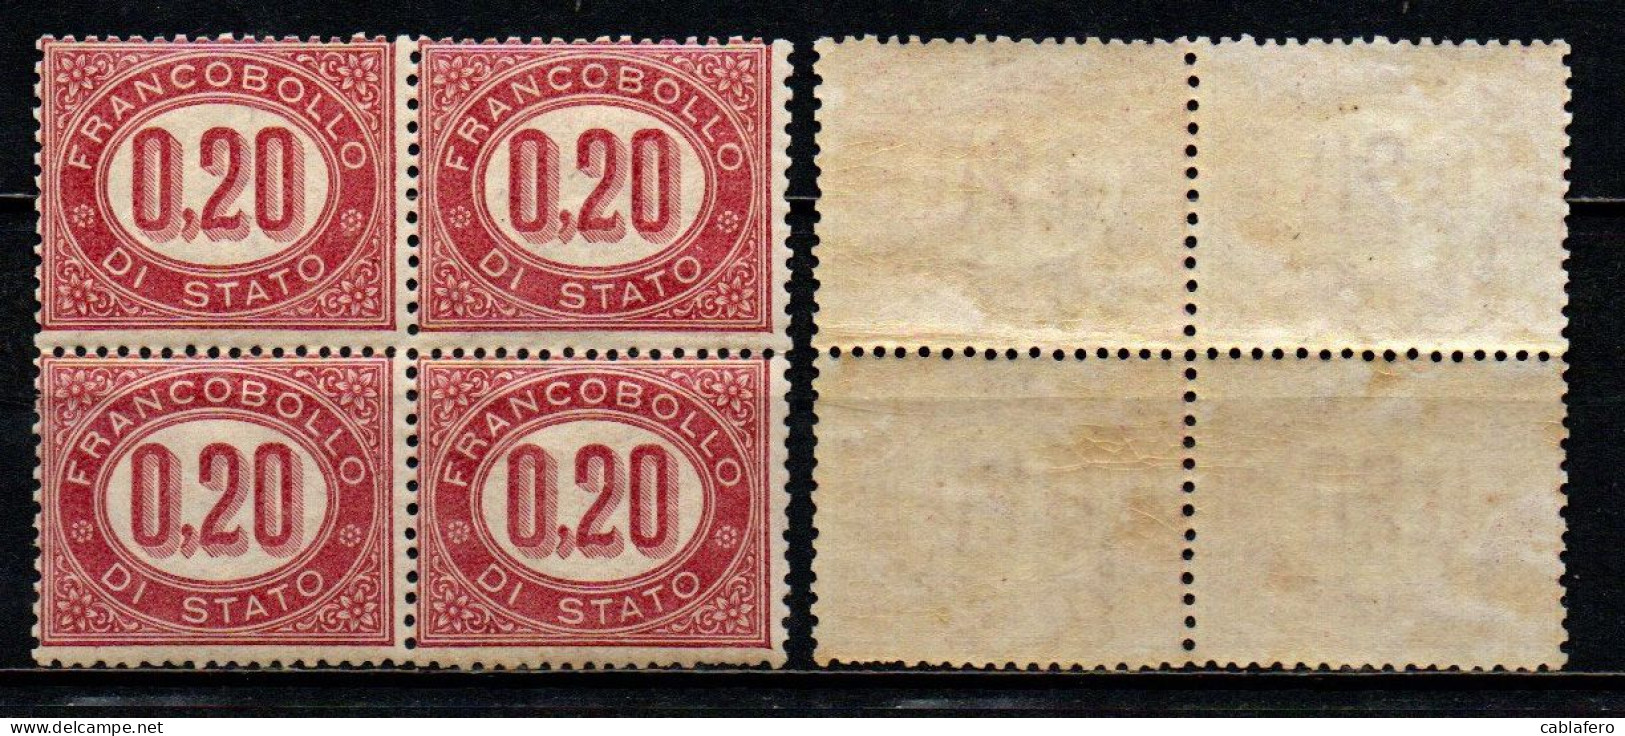 ITALIA REGNO - 1875 - CIFRA IN UN OVALE - VALORE DA 0,20 C.- LACCA SCURO - QUARTINA - MNH - Dienstzegels